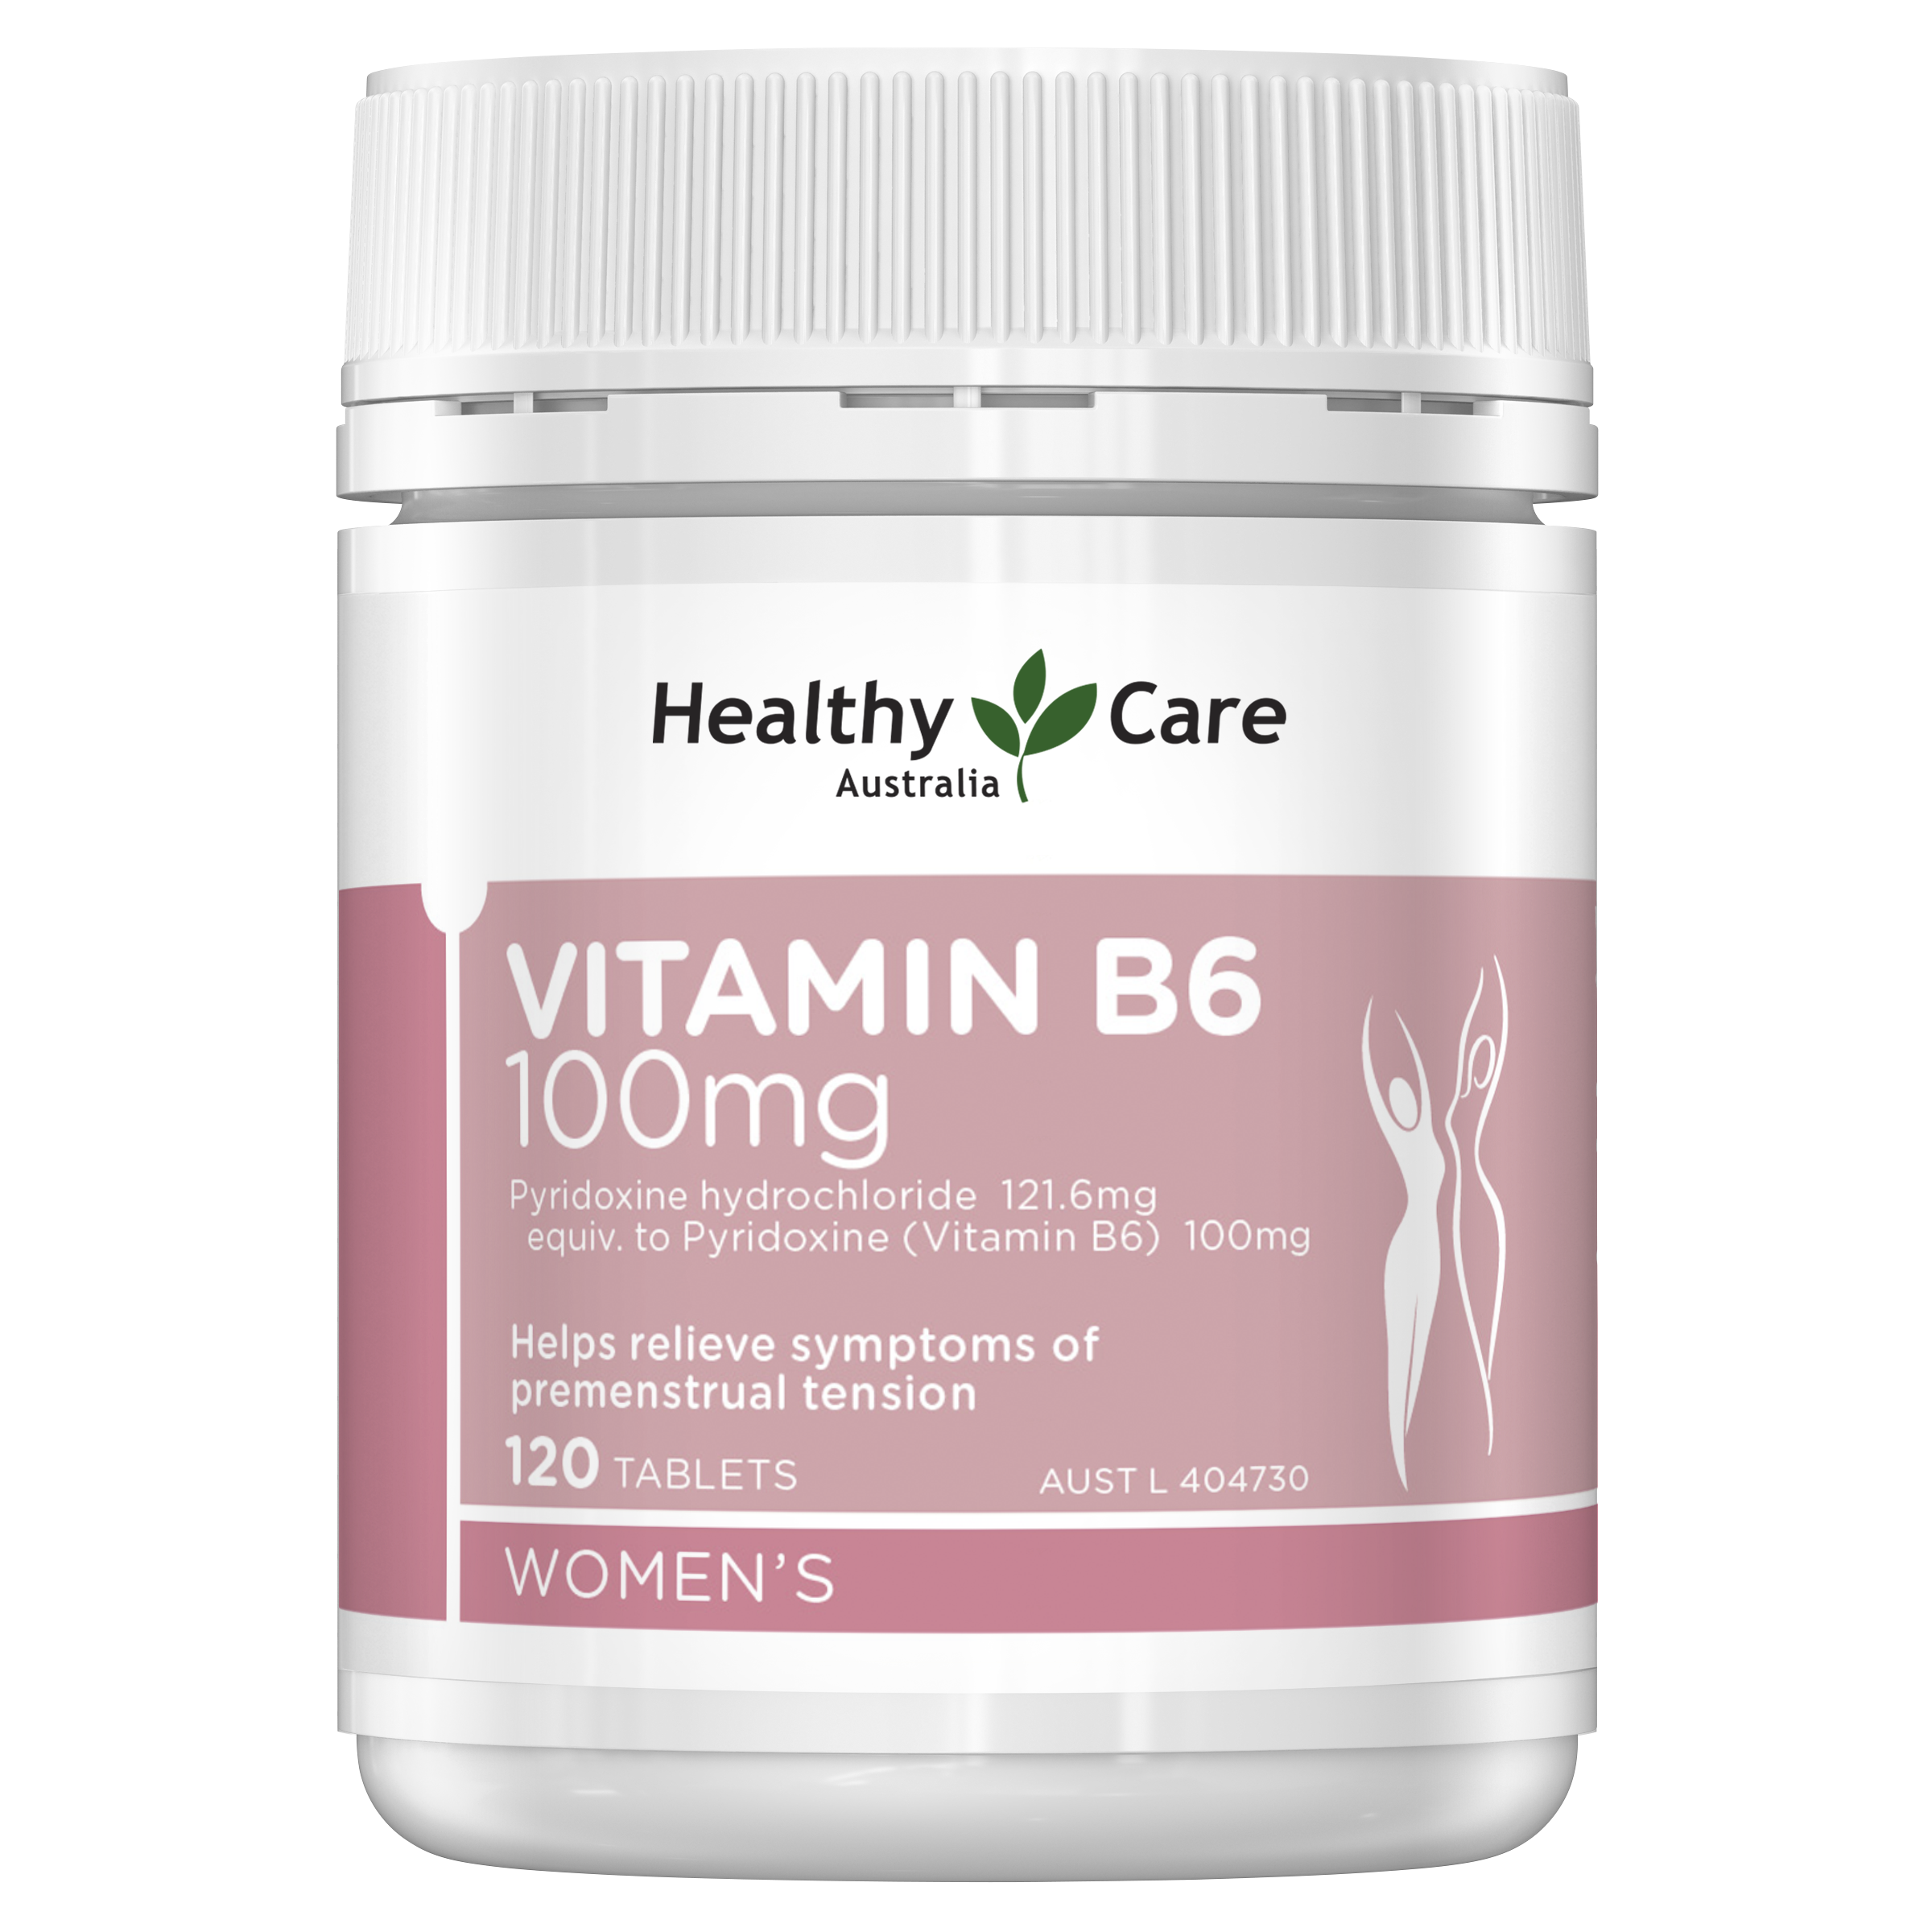 Healthy Care Vitamin B6 100mg - 120 Tablets